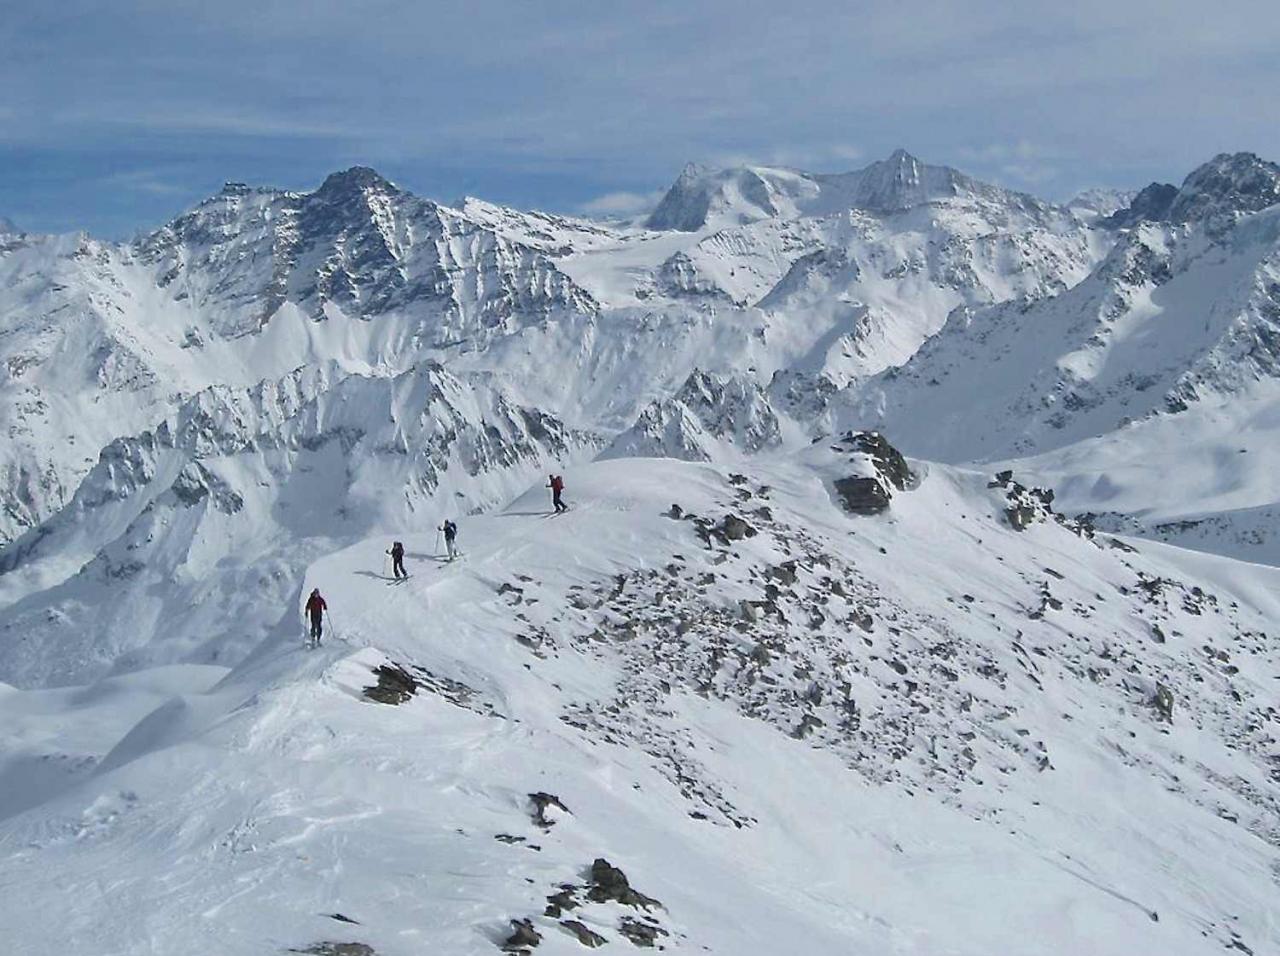 Ski touring Switzerland - Level 1: Val de Bagne and Grand St Bernard